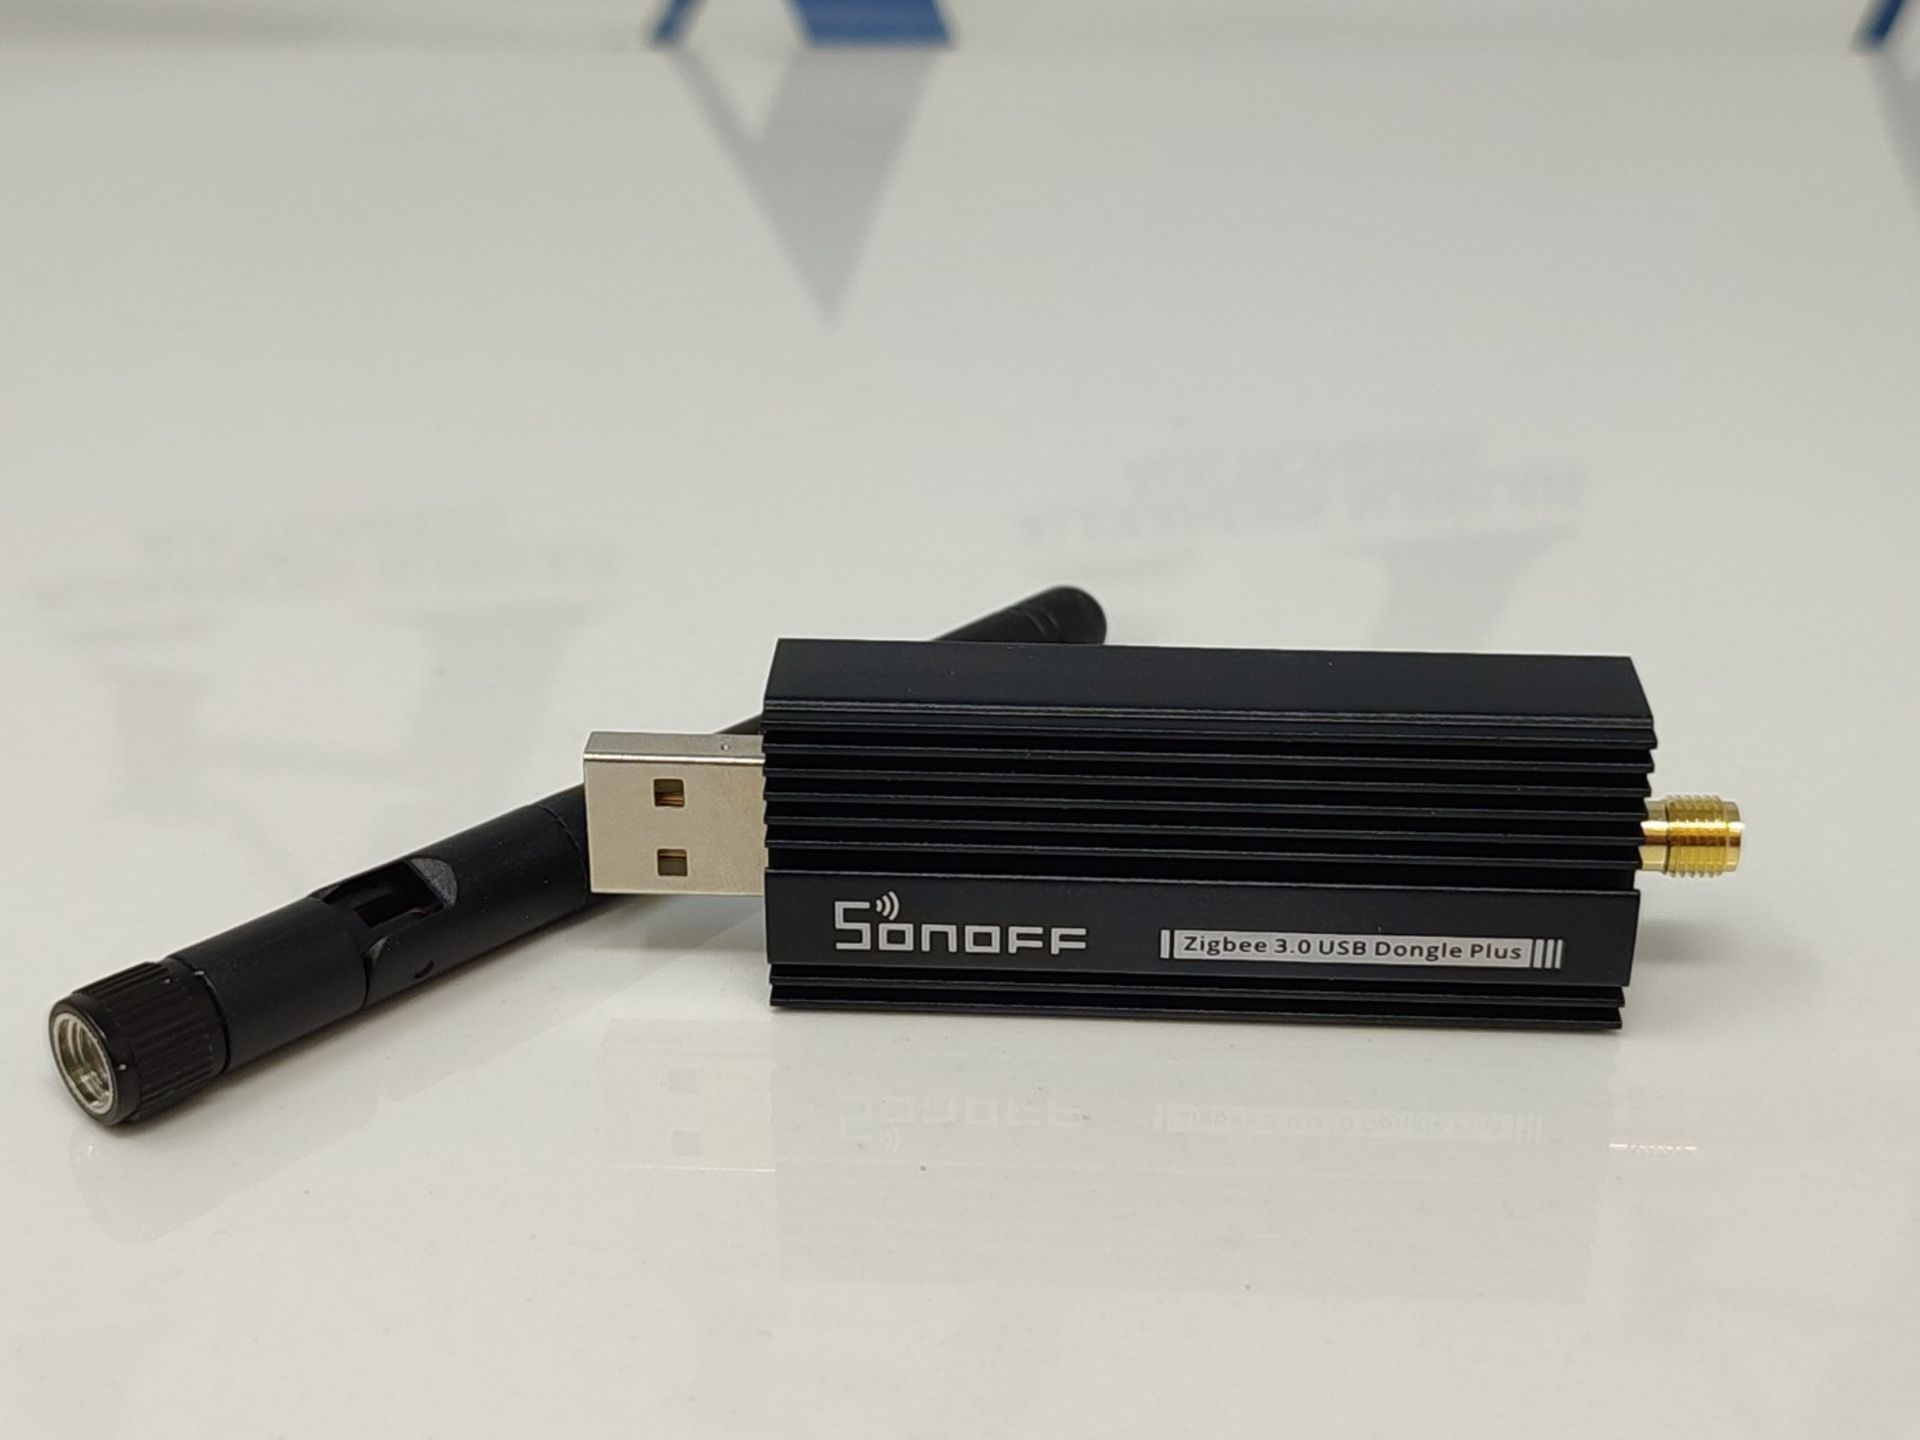 Zigbee Gateway, ZBDongle-E USB Zigbee 3.0 USB Dongle Plus, EFR32MG21 + CH9102F Zigbee - Bild 2 aus 4